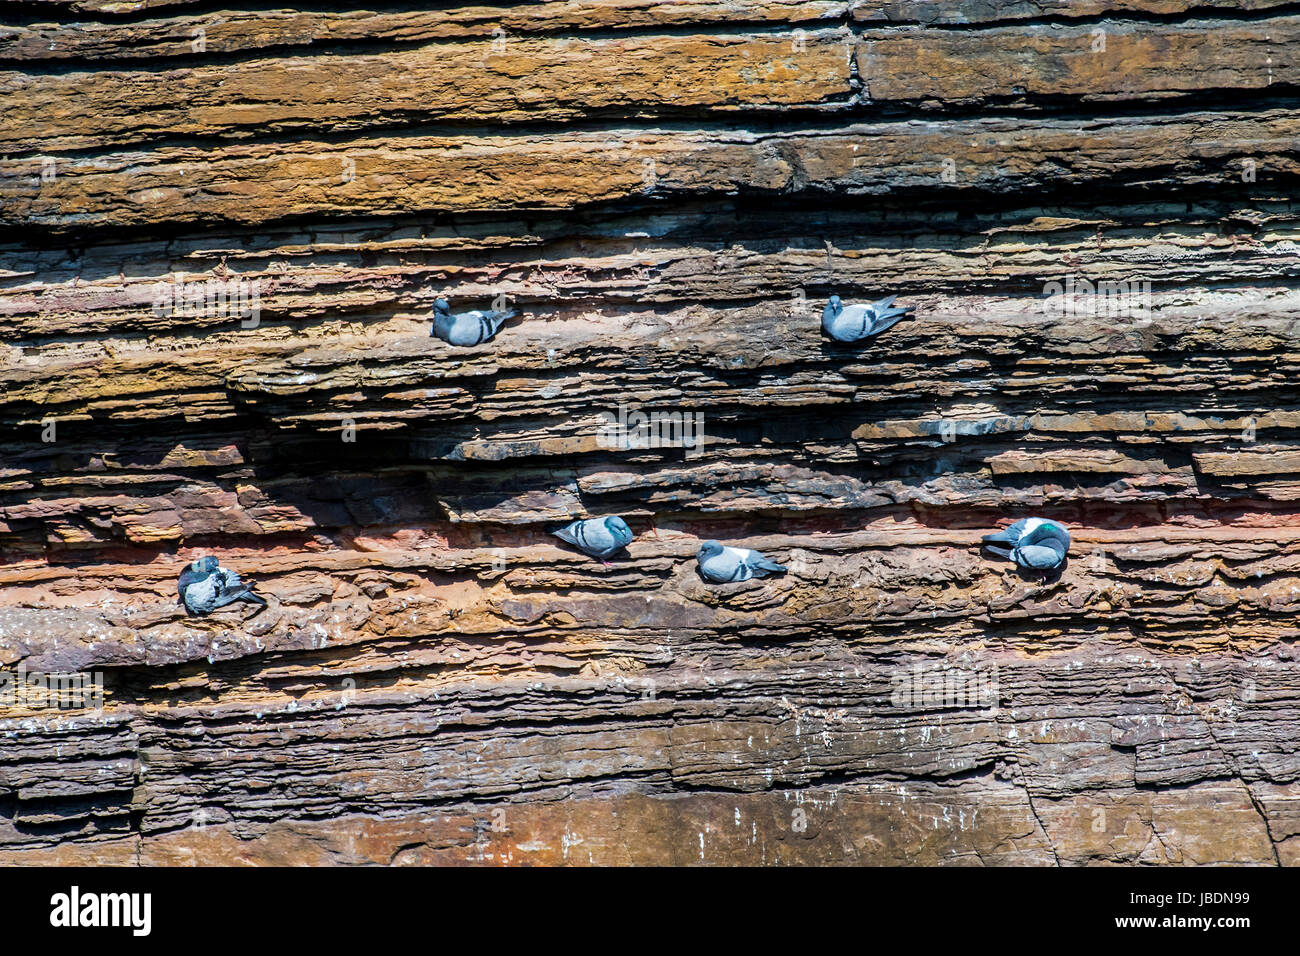 Rock doves / rock pigeons (Columba livia) nesting on ledges in cliff face along the Scottish coast Stock Photo